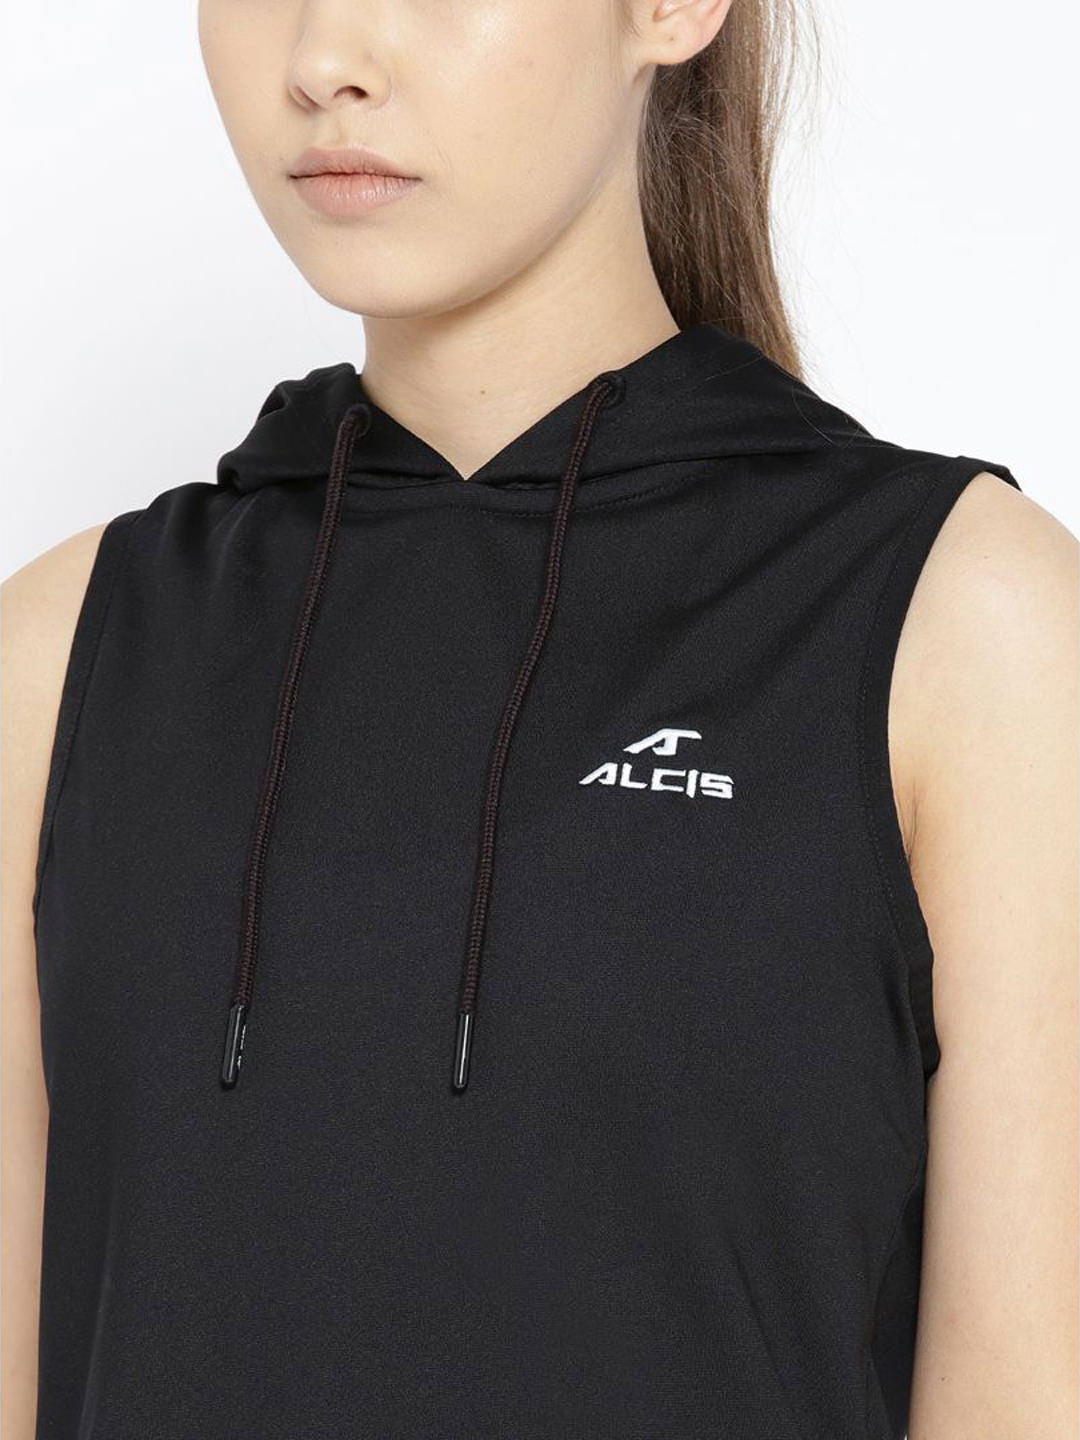 Alcis Women Black Solid Hooded Sleeveless Sweatshirt